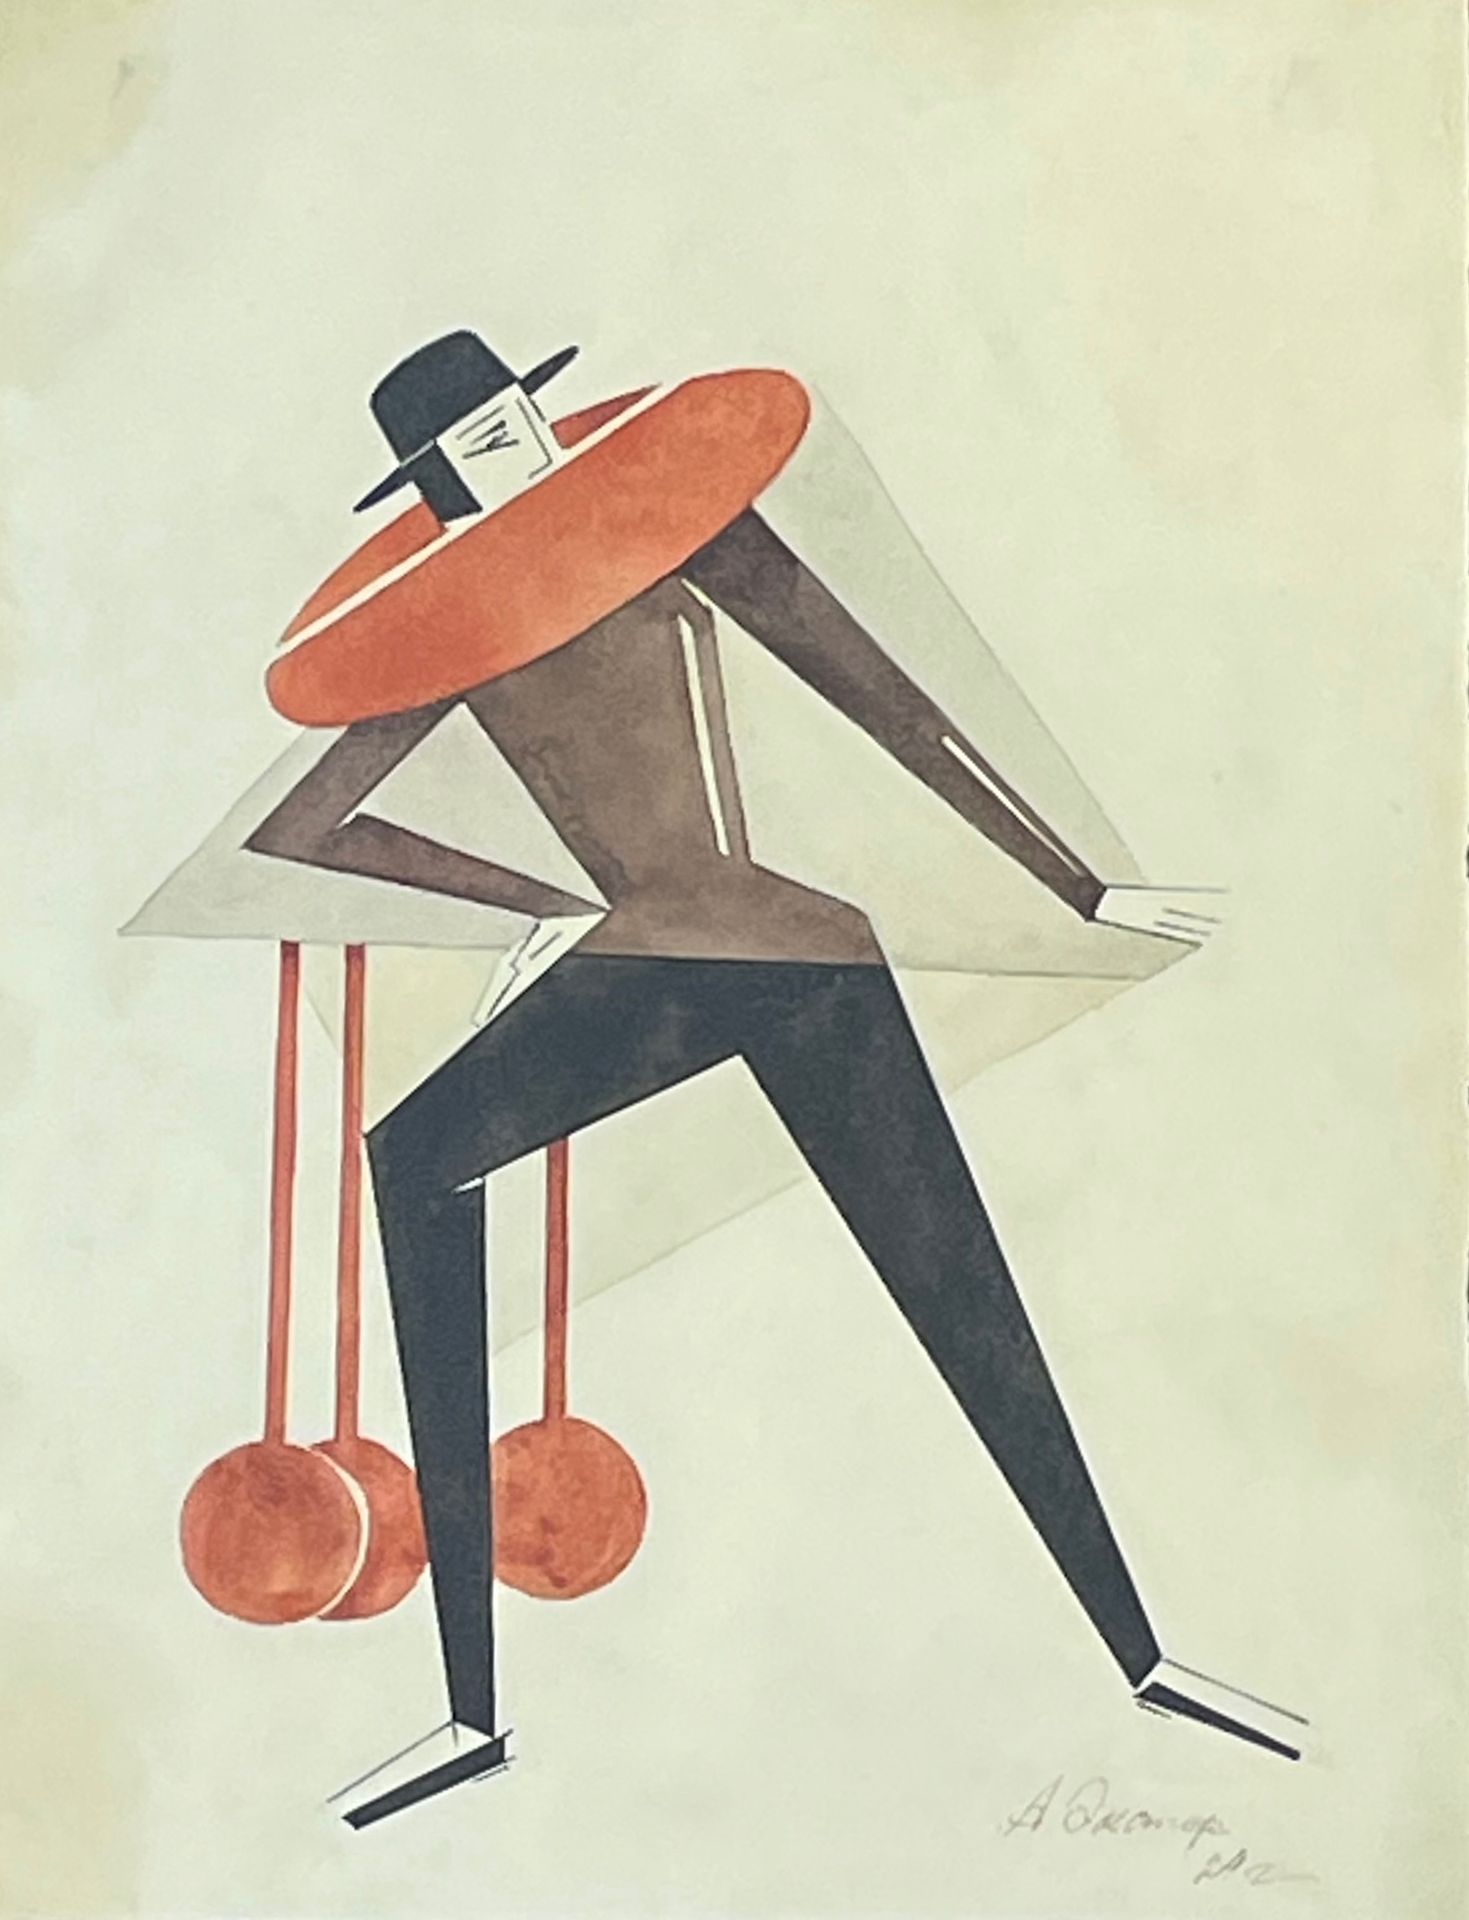 Null 外界（亚历山德拉）。"La Dama duende"（1924）。纸上水粉画，右下角有日期和签名，装在木框里。框架尺寸：44 x 36.5厘米；主题：&hellip;